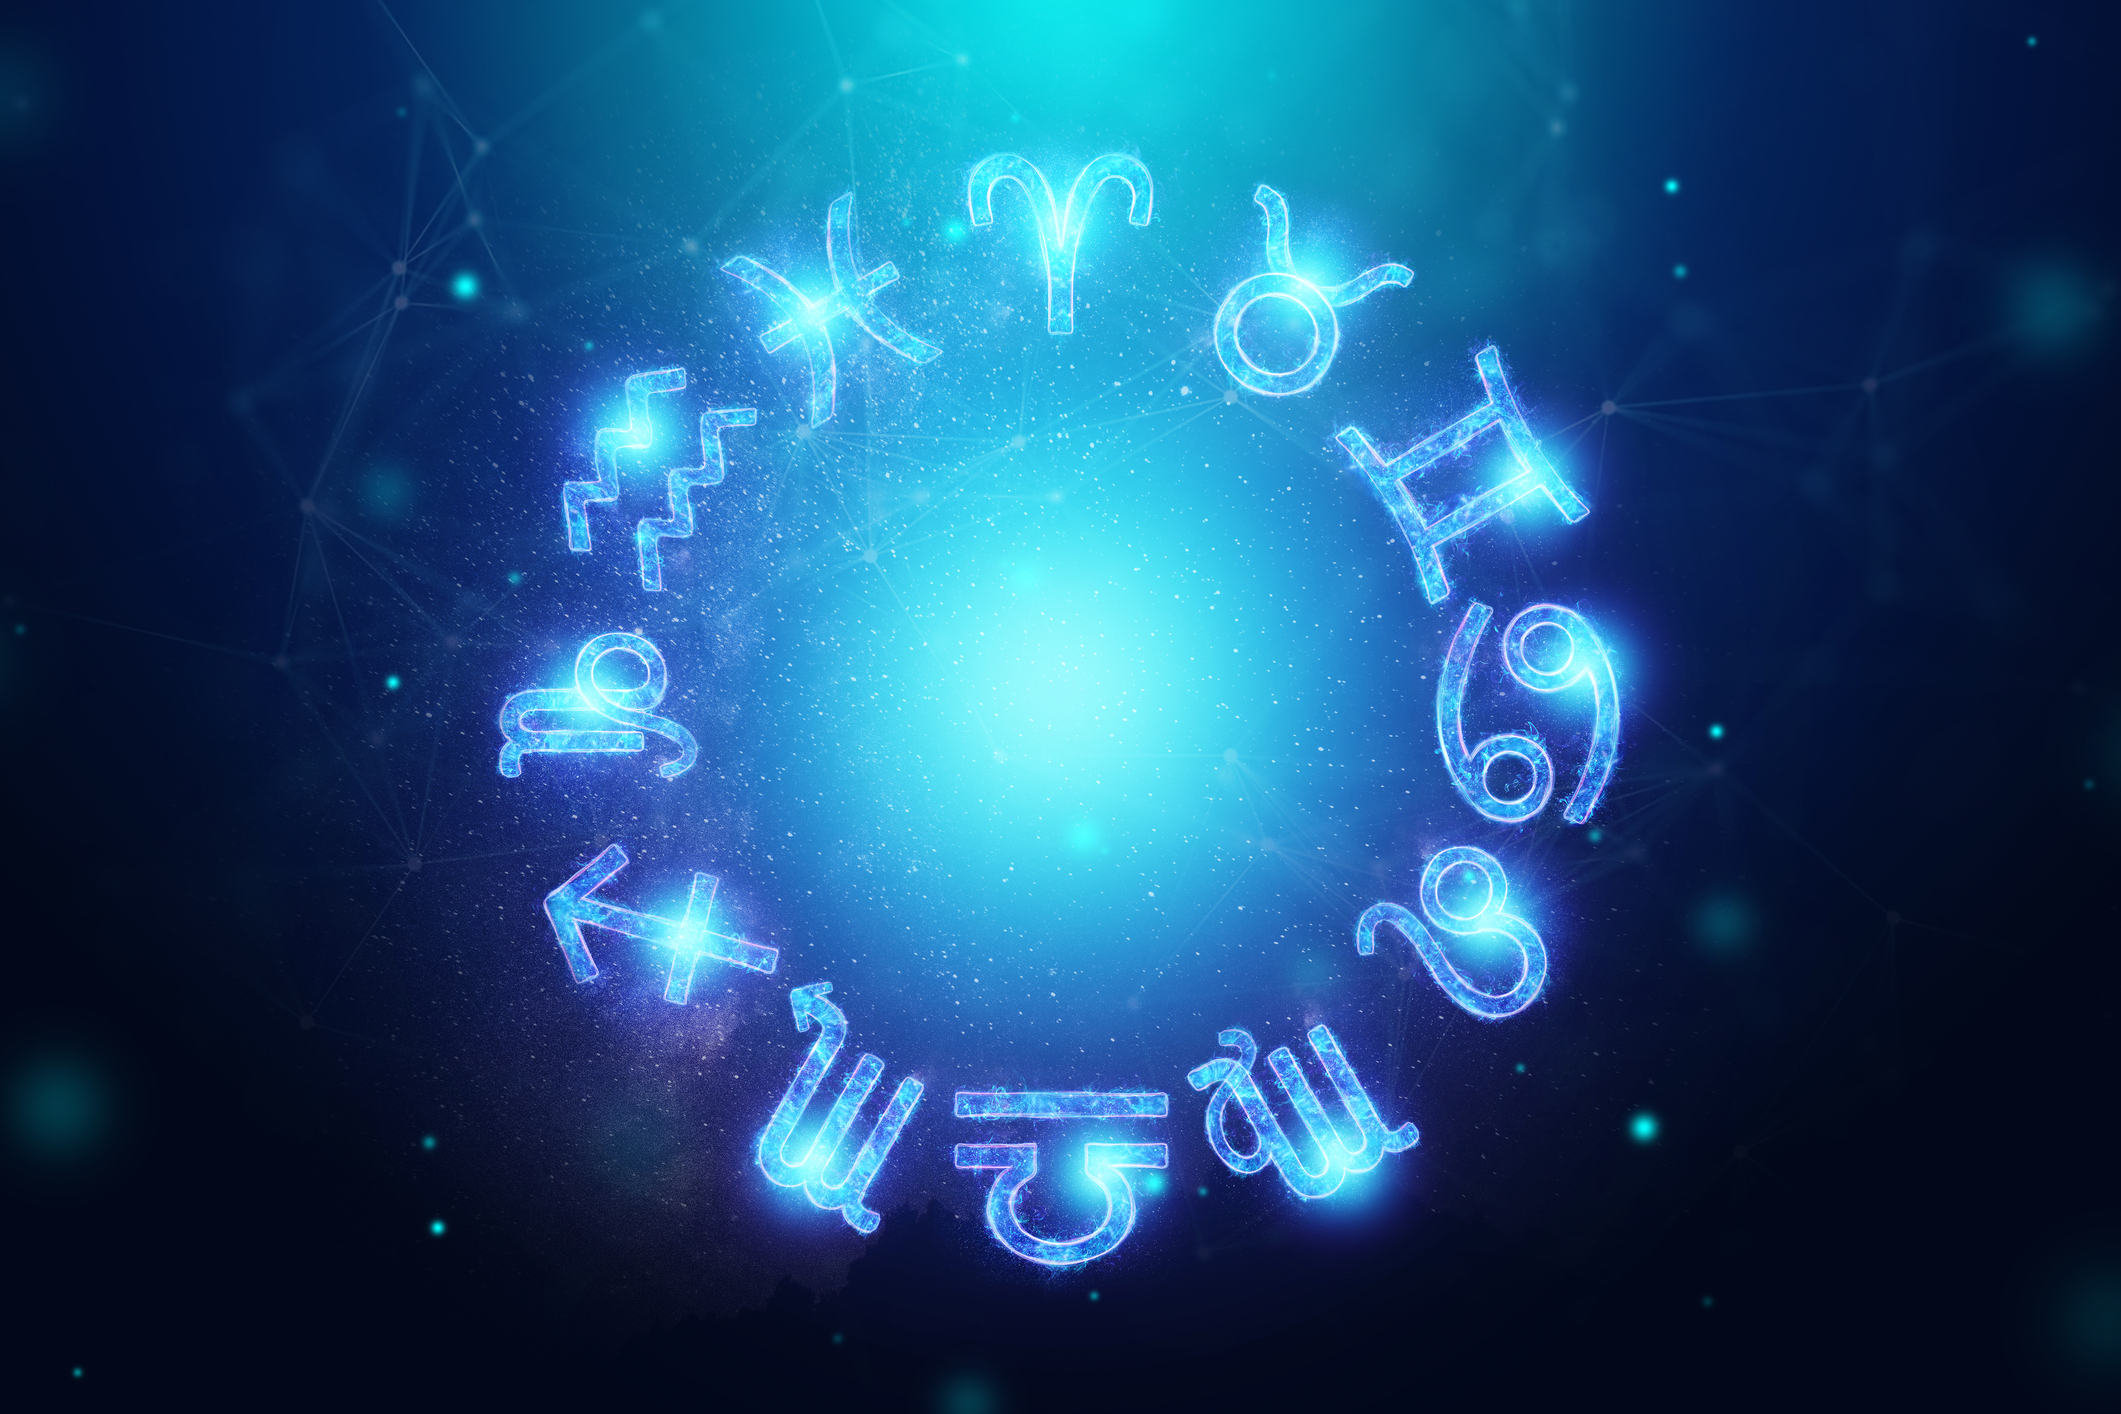 The 12 Zodiac signs in circle around a round illuminated centre